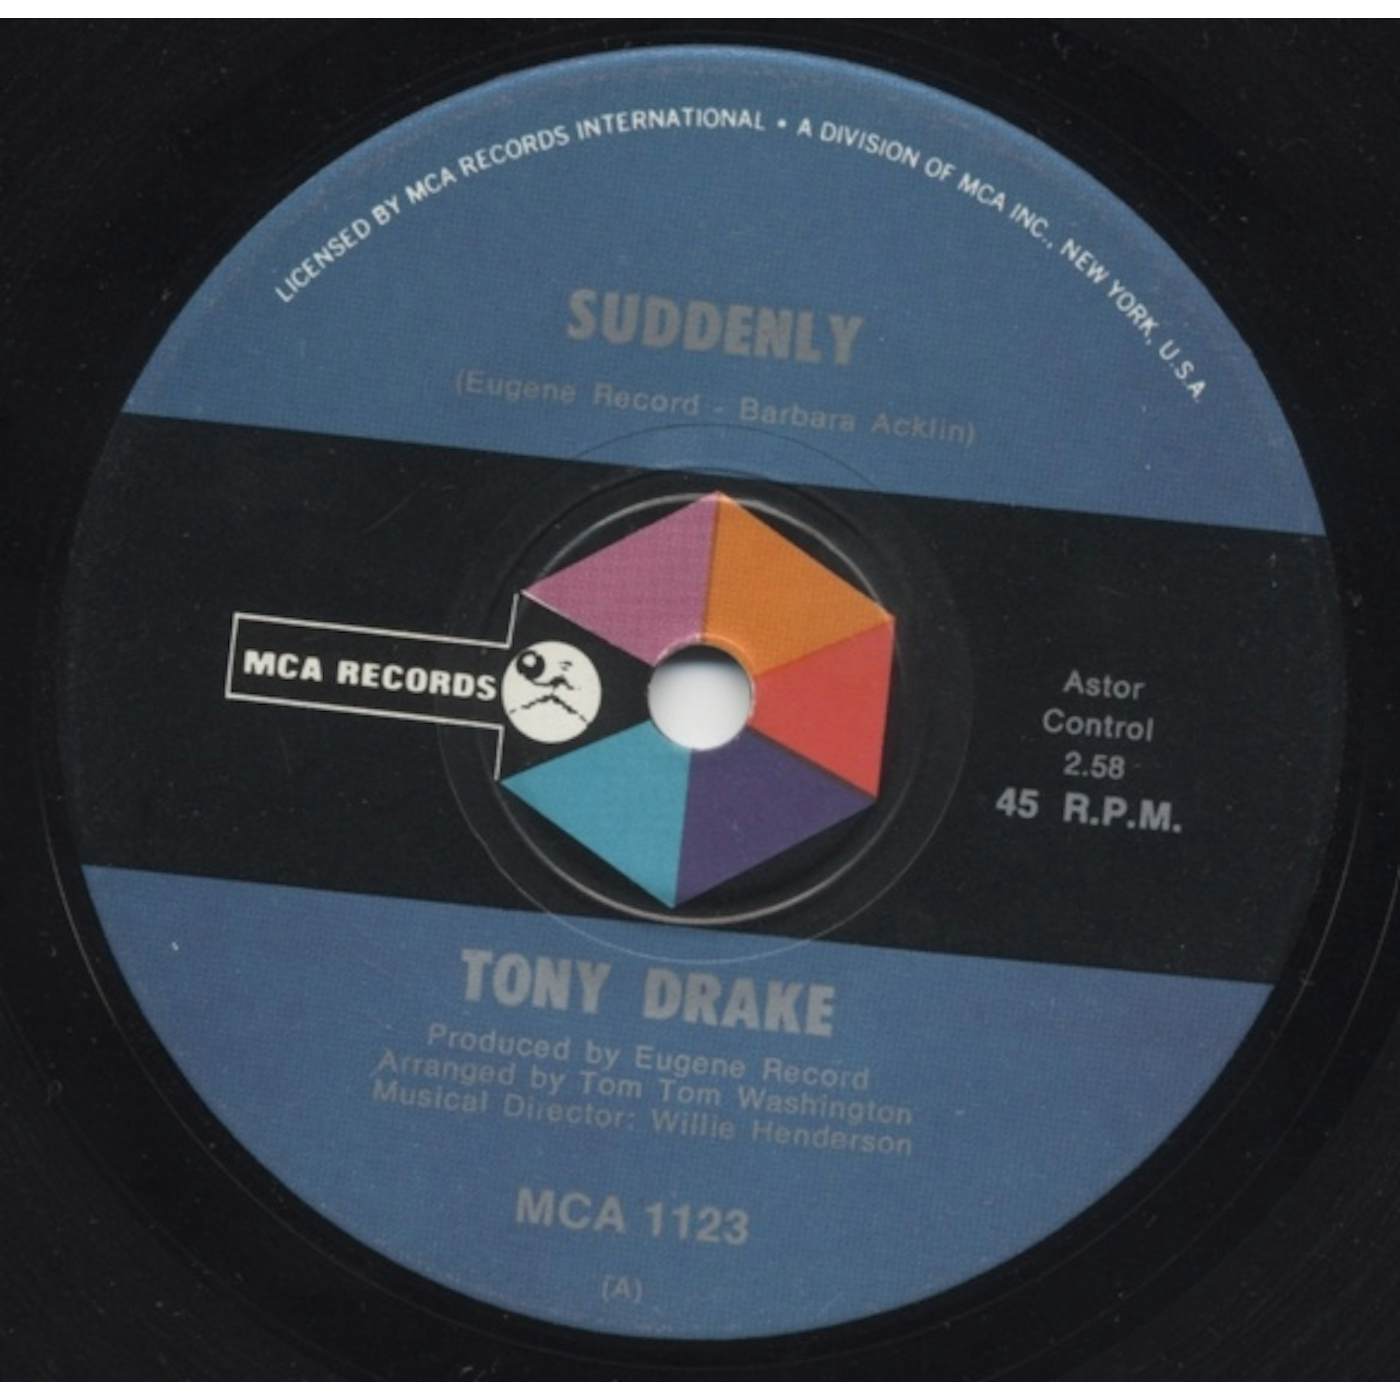 Tony Drake SUDDENLY Vinyl Record - UK Release